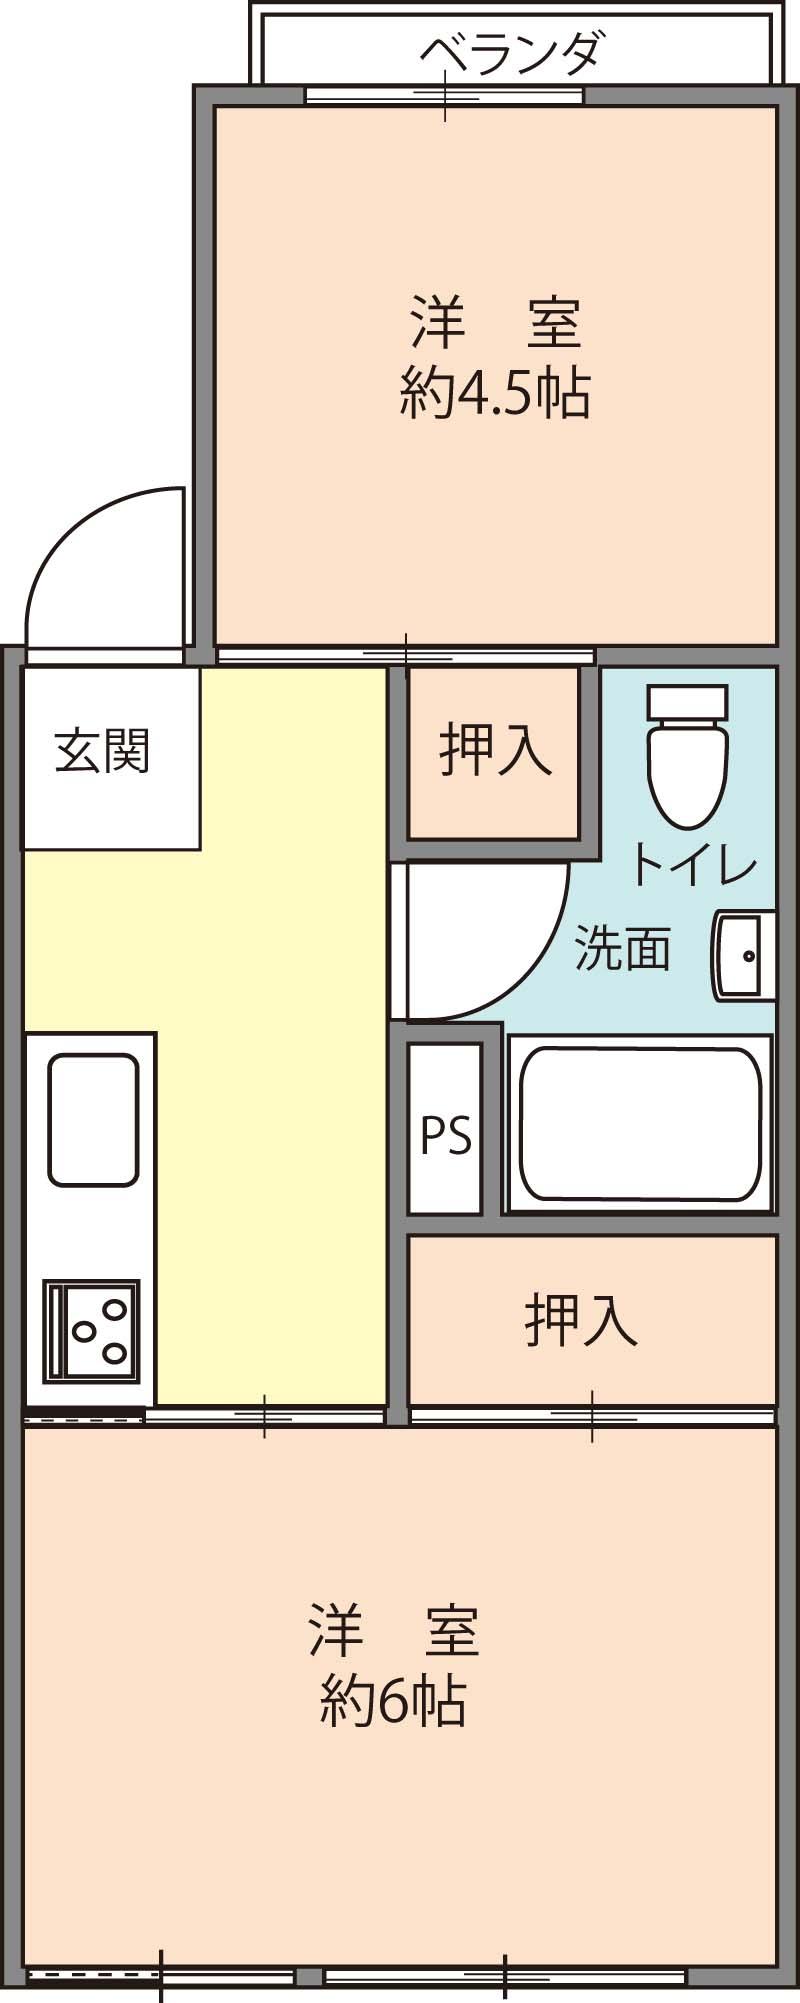 Floor plan. 2K, Price $ 40,000, Occupied area 26.79 sq m , Balcony area 2 sq m